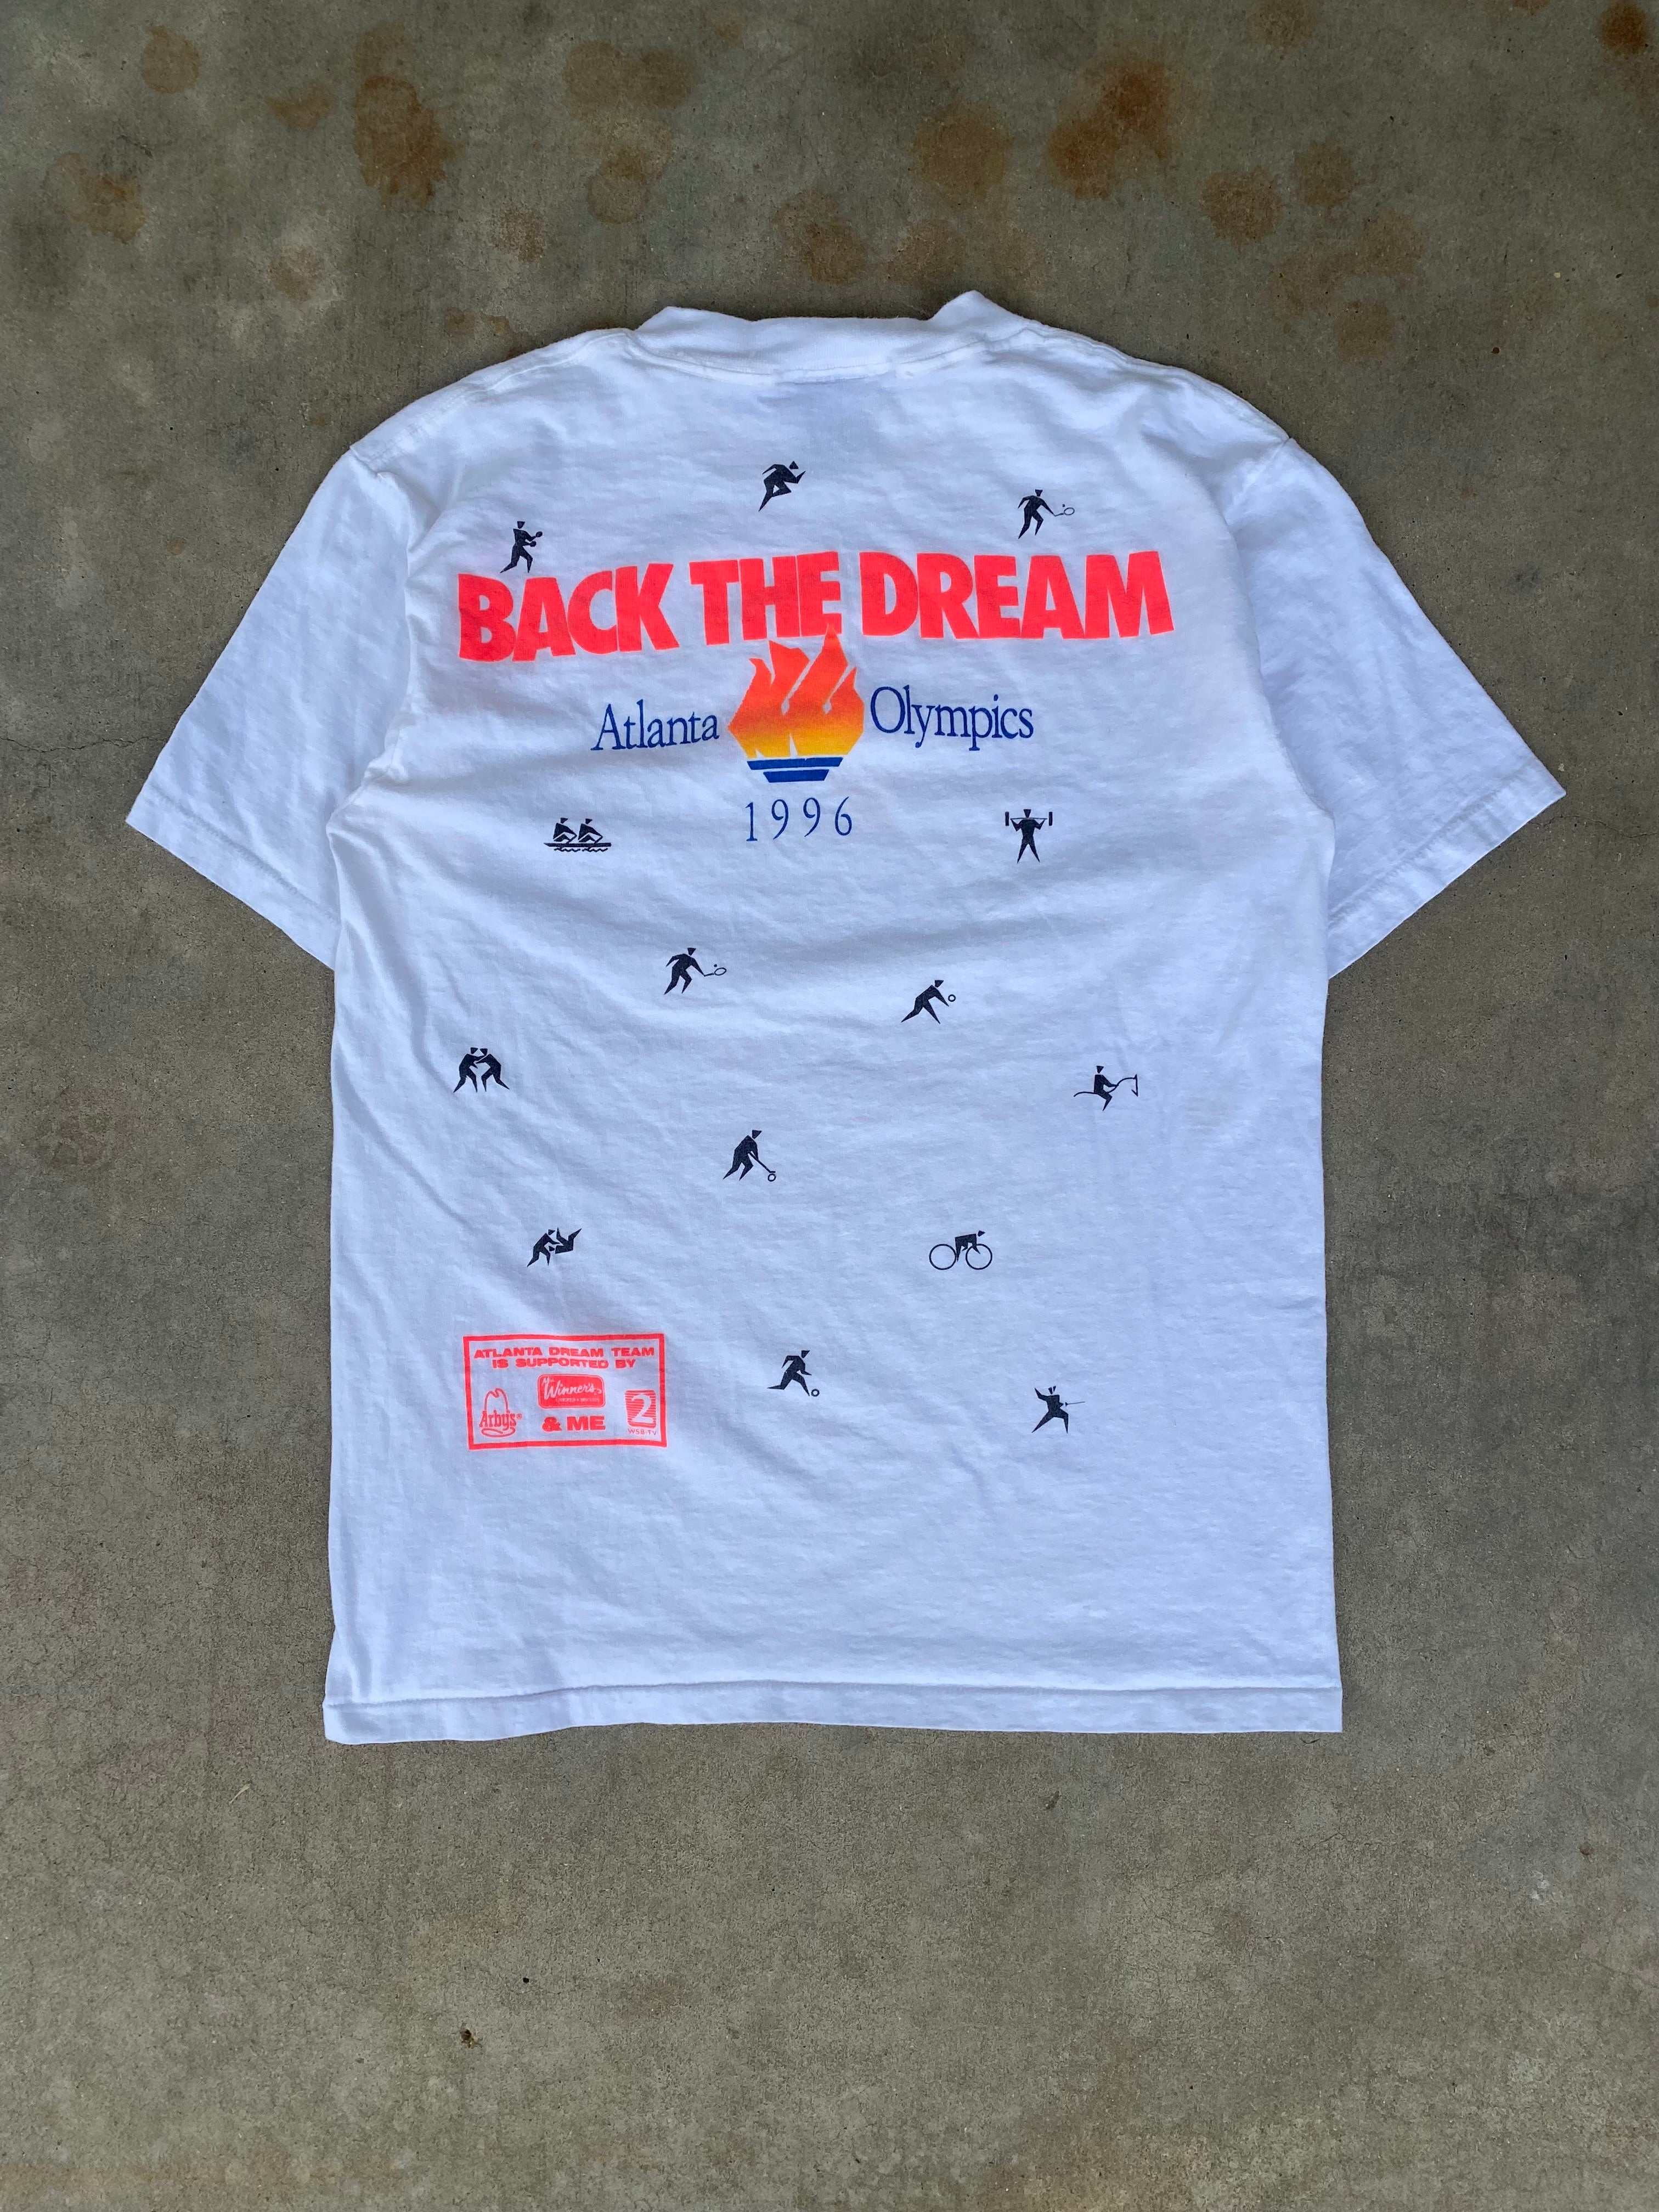 1996 Atlanta Olympics Back the Dream T-Shirt (M)